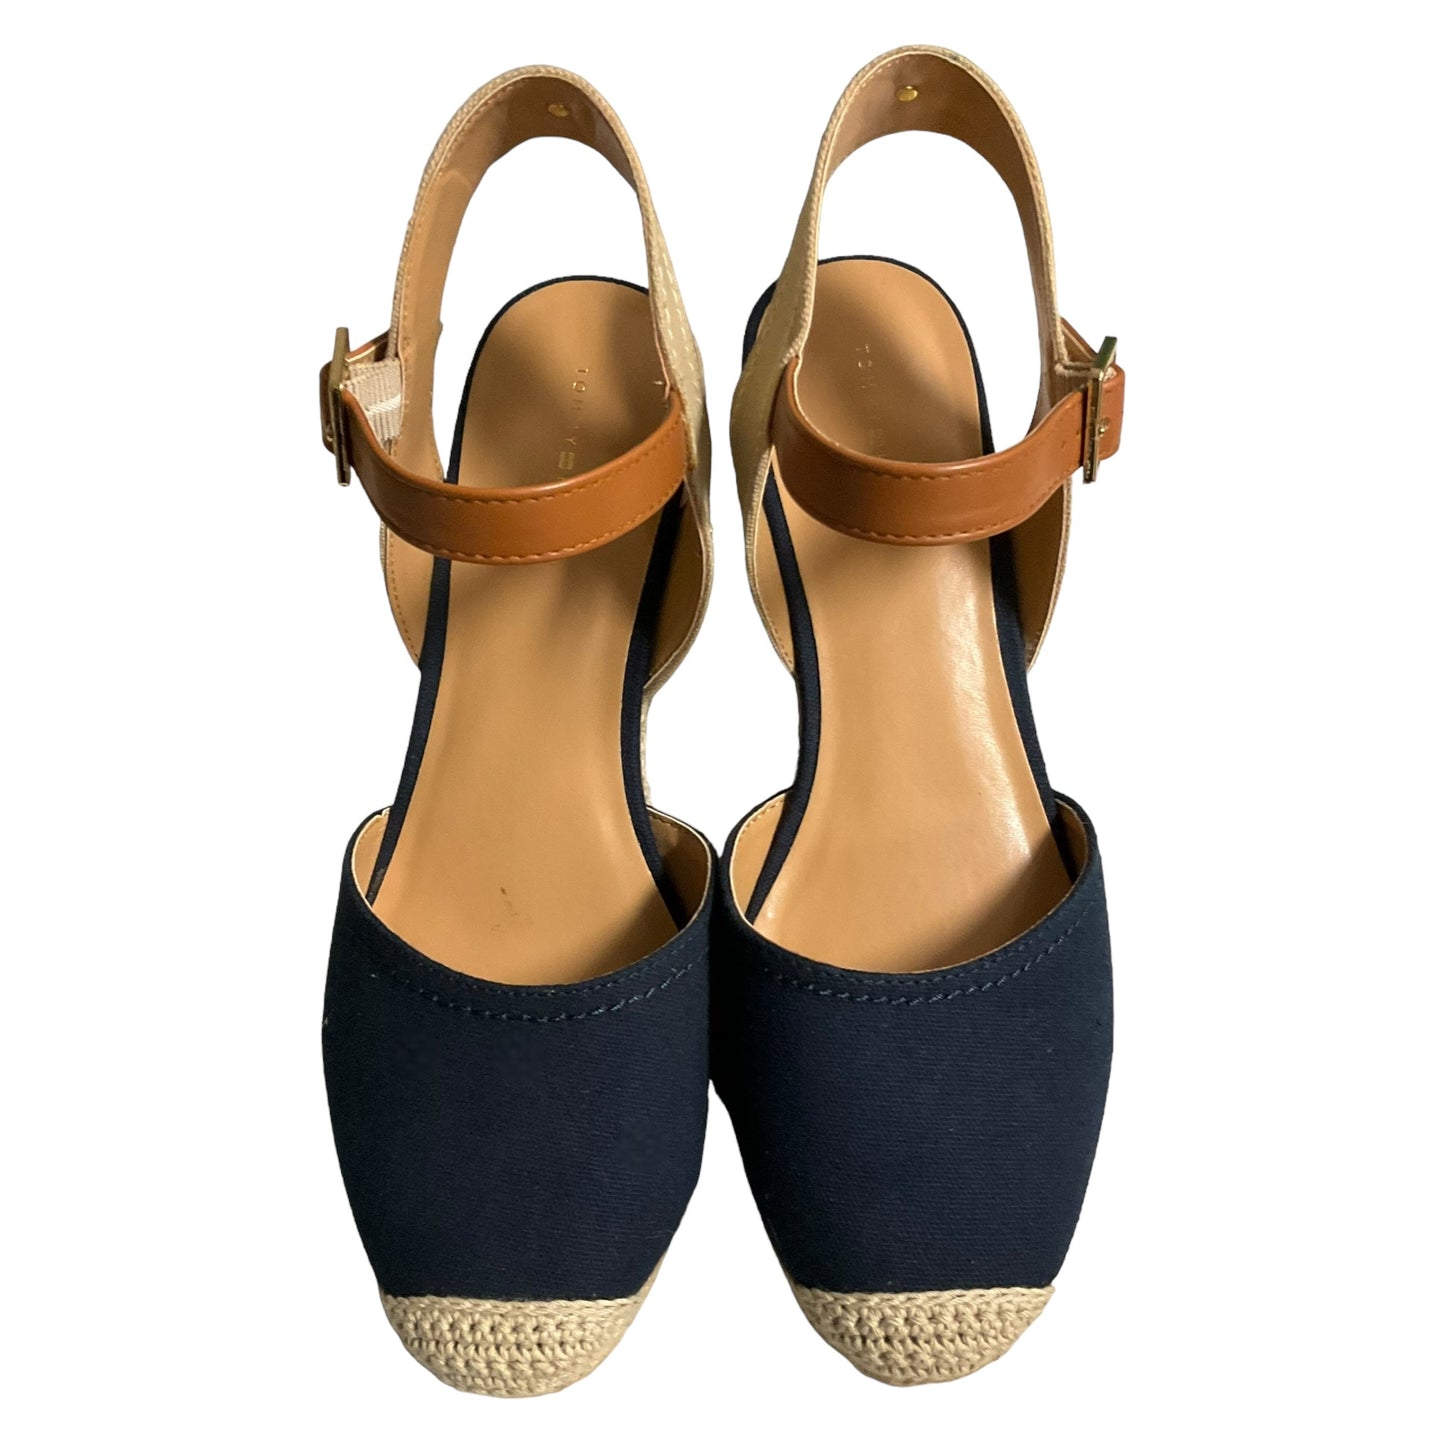 Blue Shoes Heels Wedge Tommy Hilfiger, Size 10